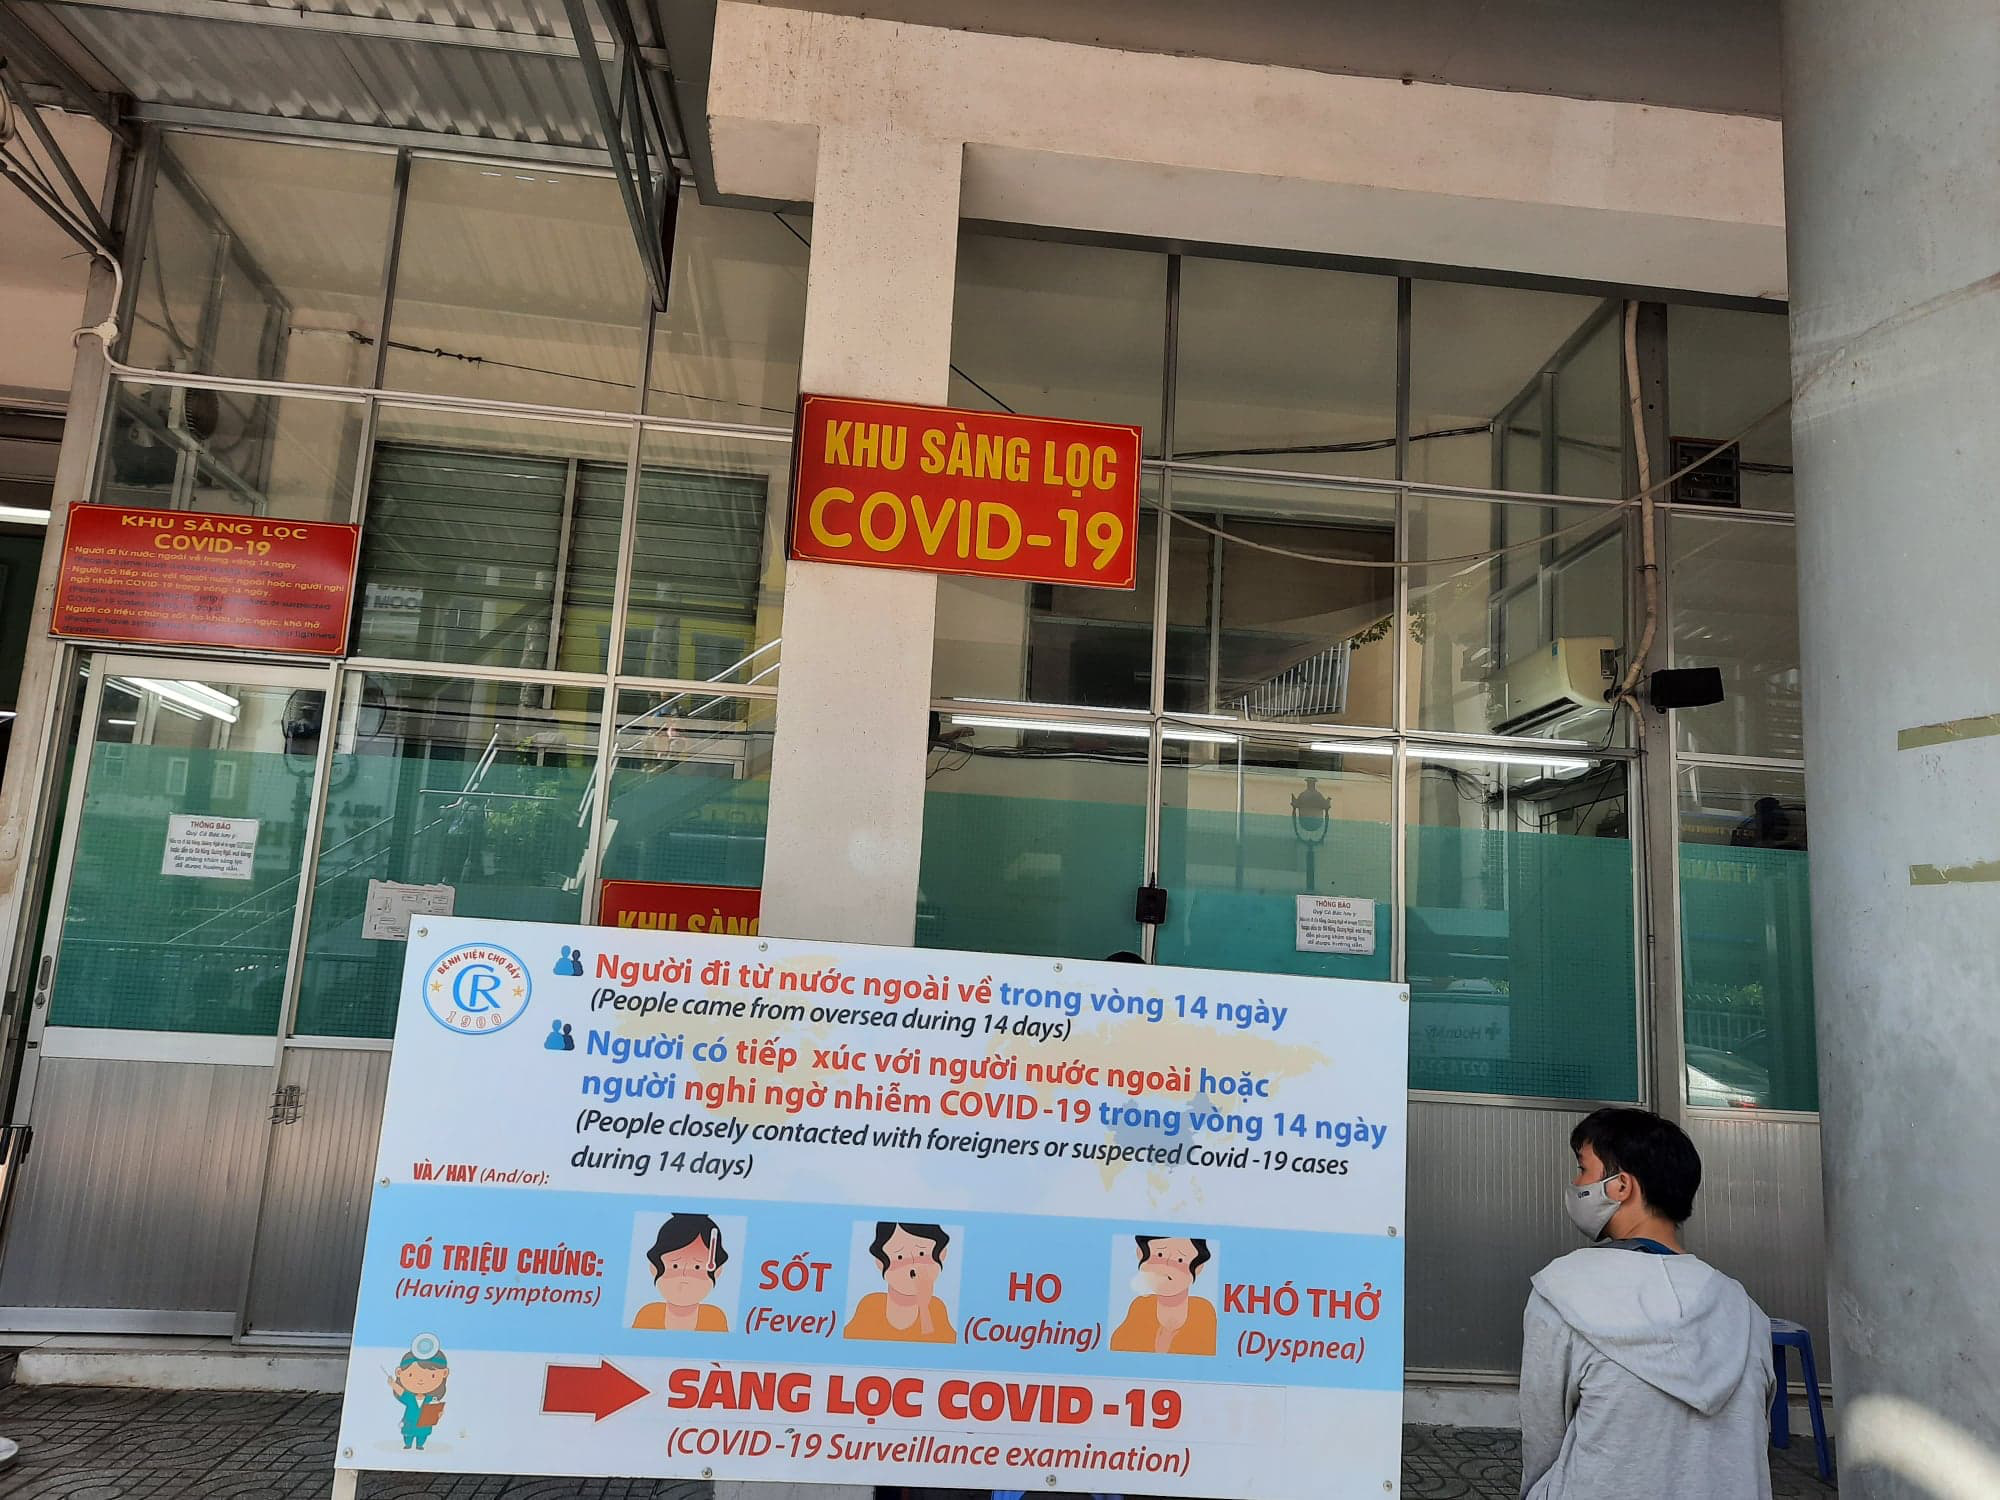 8 more hospitals capable of conclusive coronavirus test in Saigon